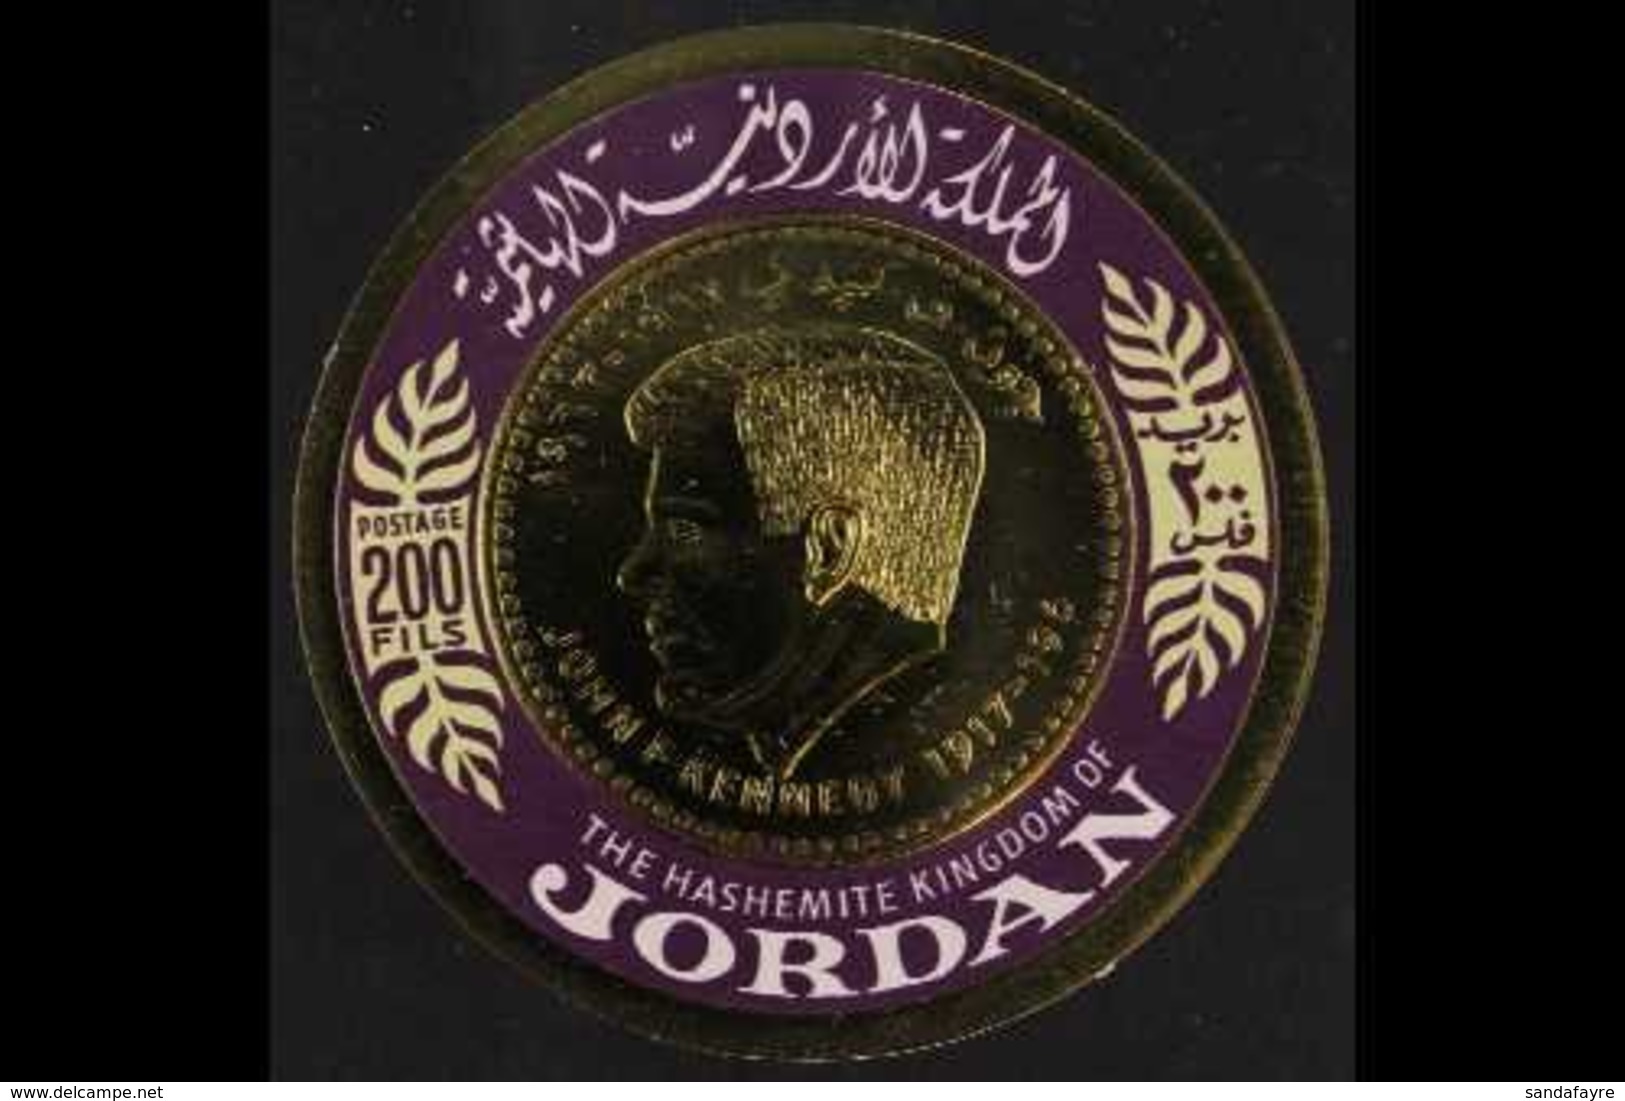 1967 GOLD COIN VARIETY 200f Purple & Bright Yellow Green (as SG 796e) "MISSING 6 VARIETY", Reads JOHN F. KENNEDY 1917-19 - Jordan